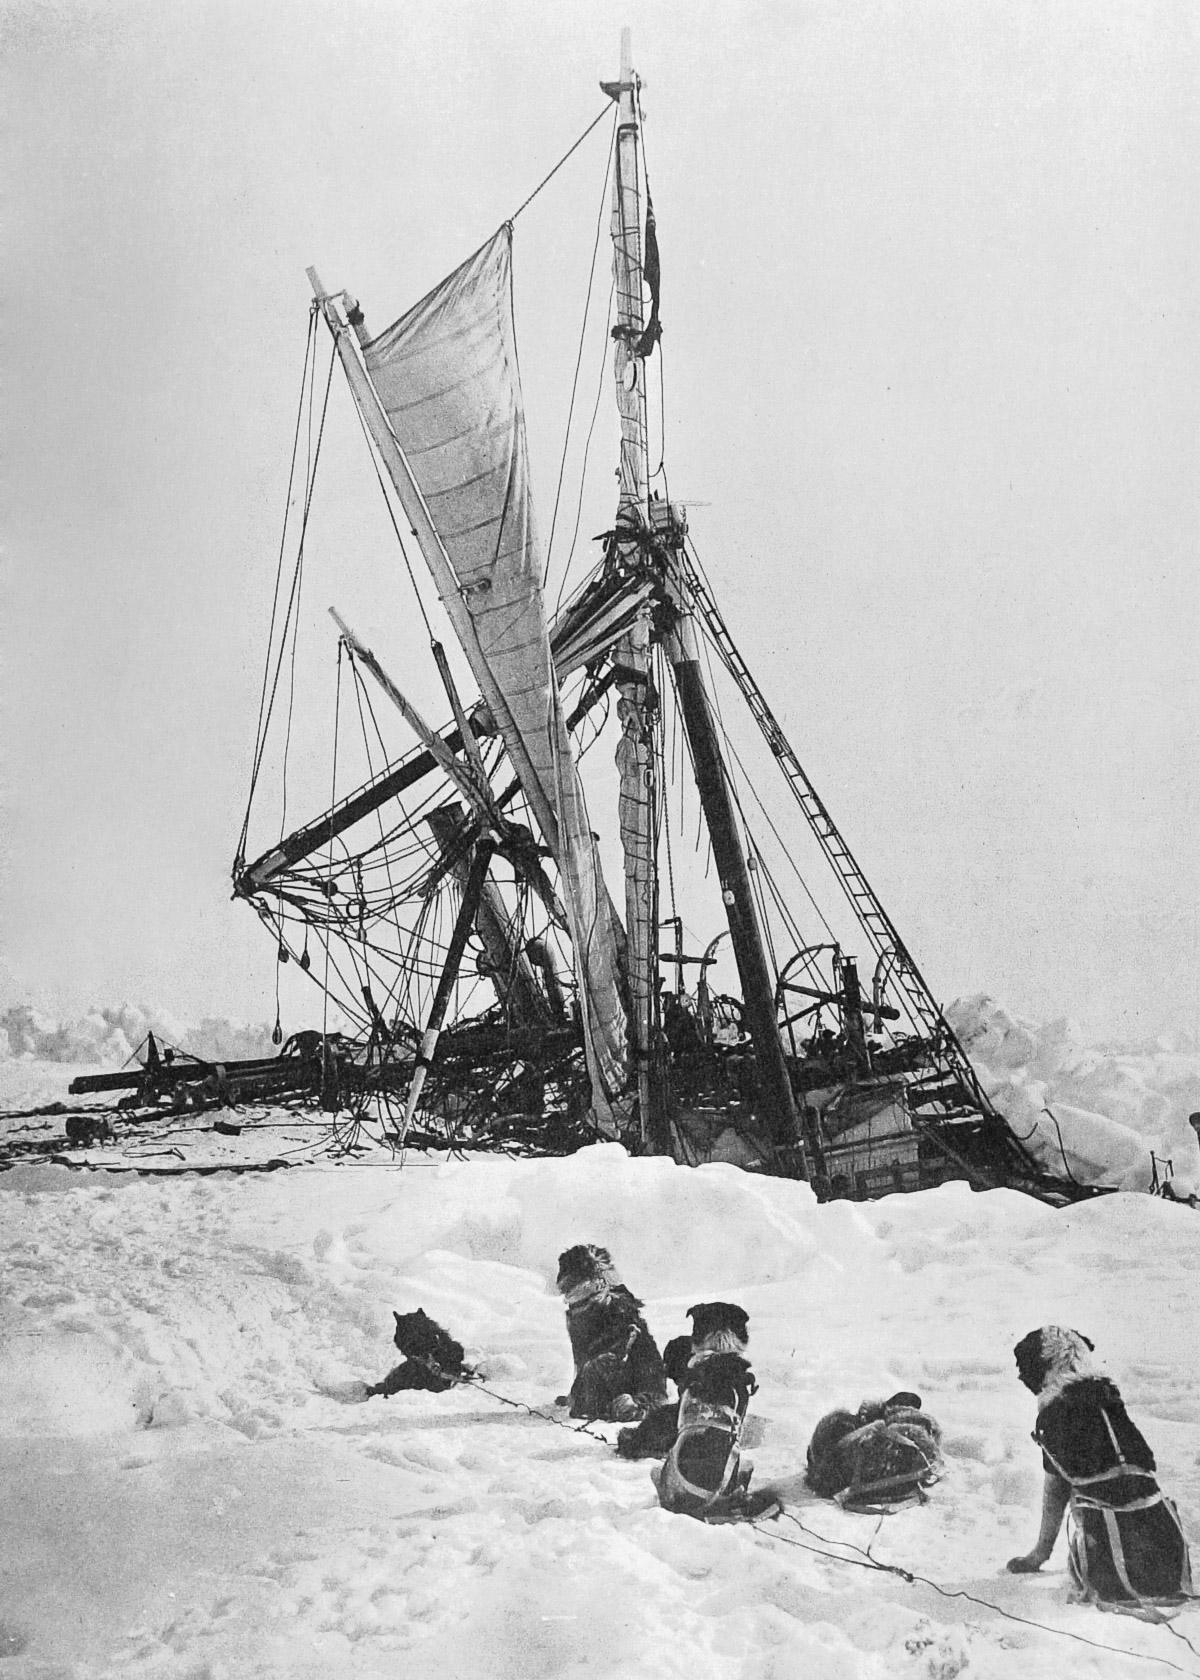 The Endurance: a lendária nave perdida de Shackleton é descoberta! 4